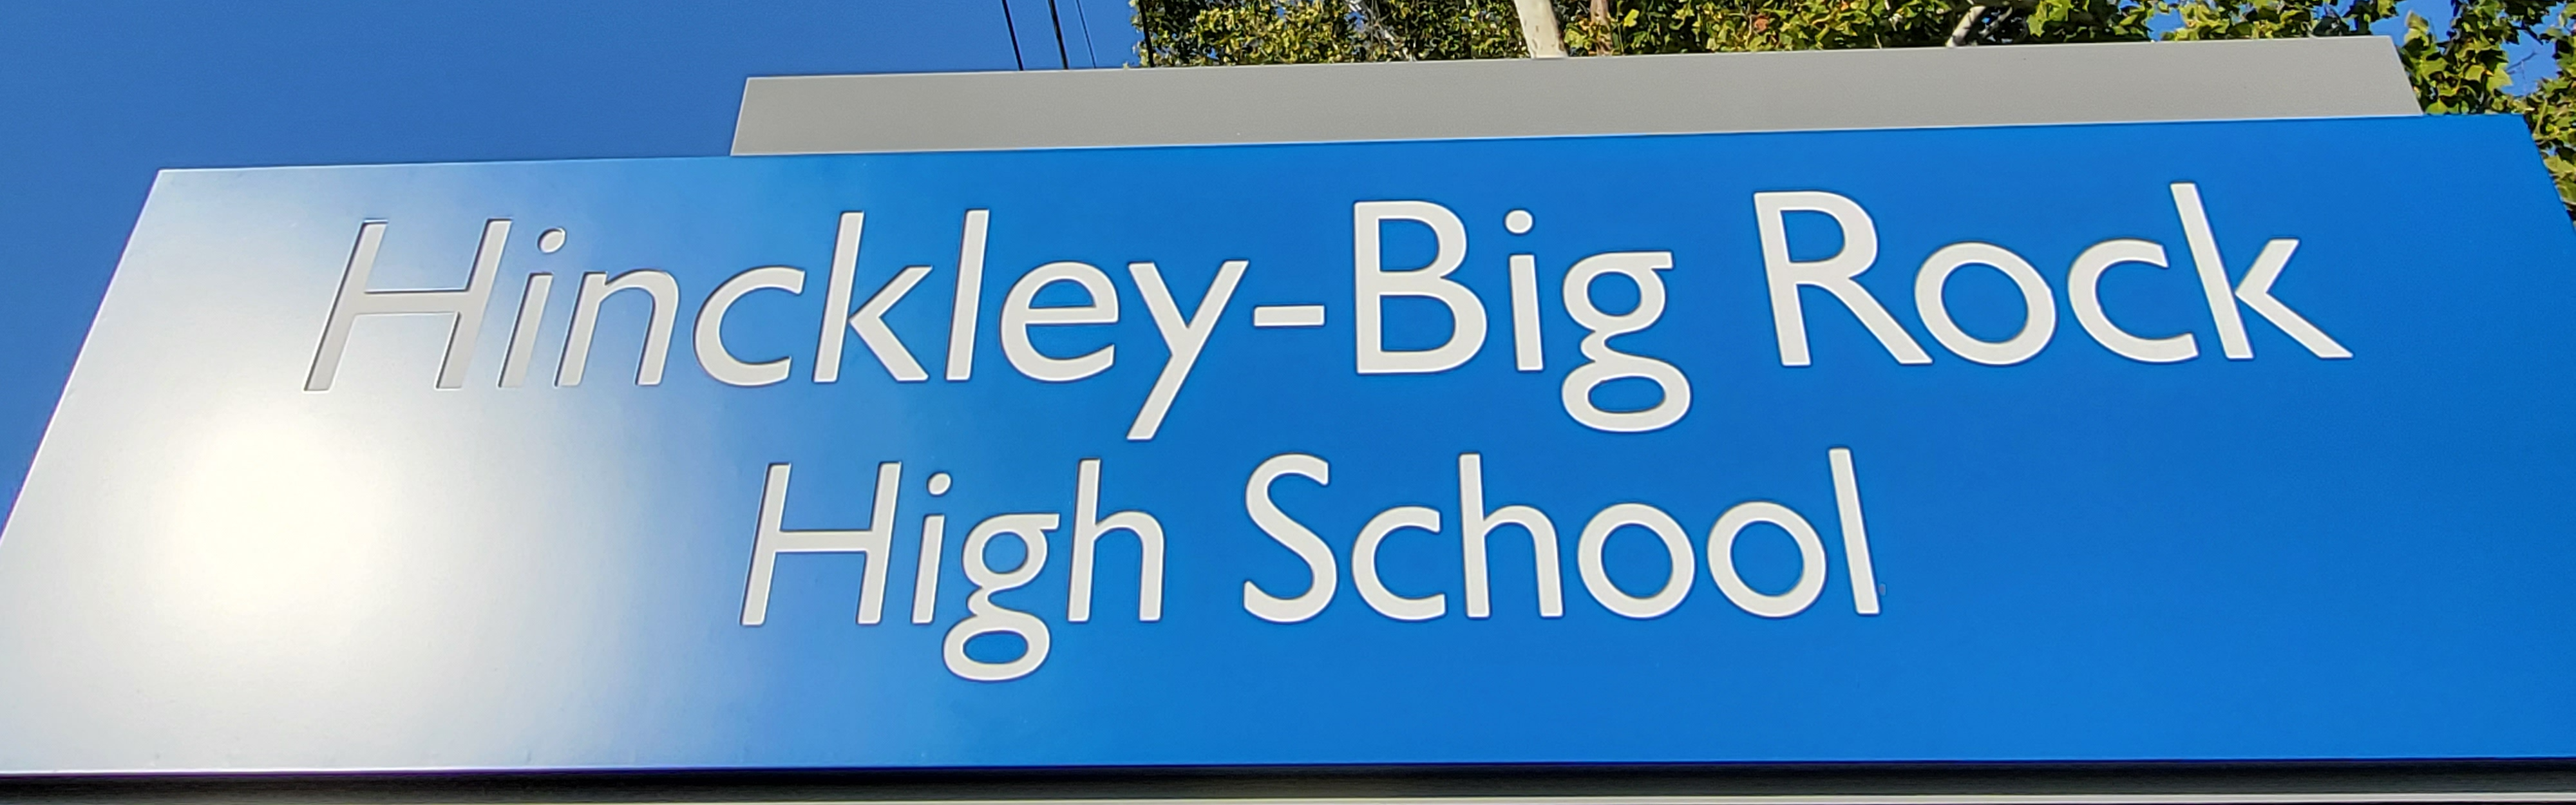 Hinckley-Big Rock High School sign with tree